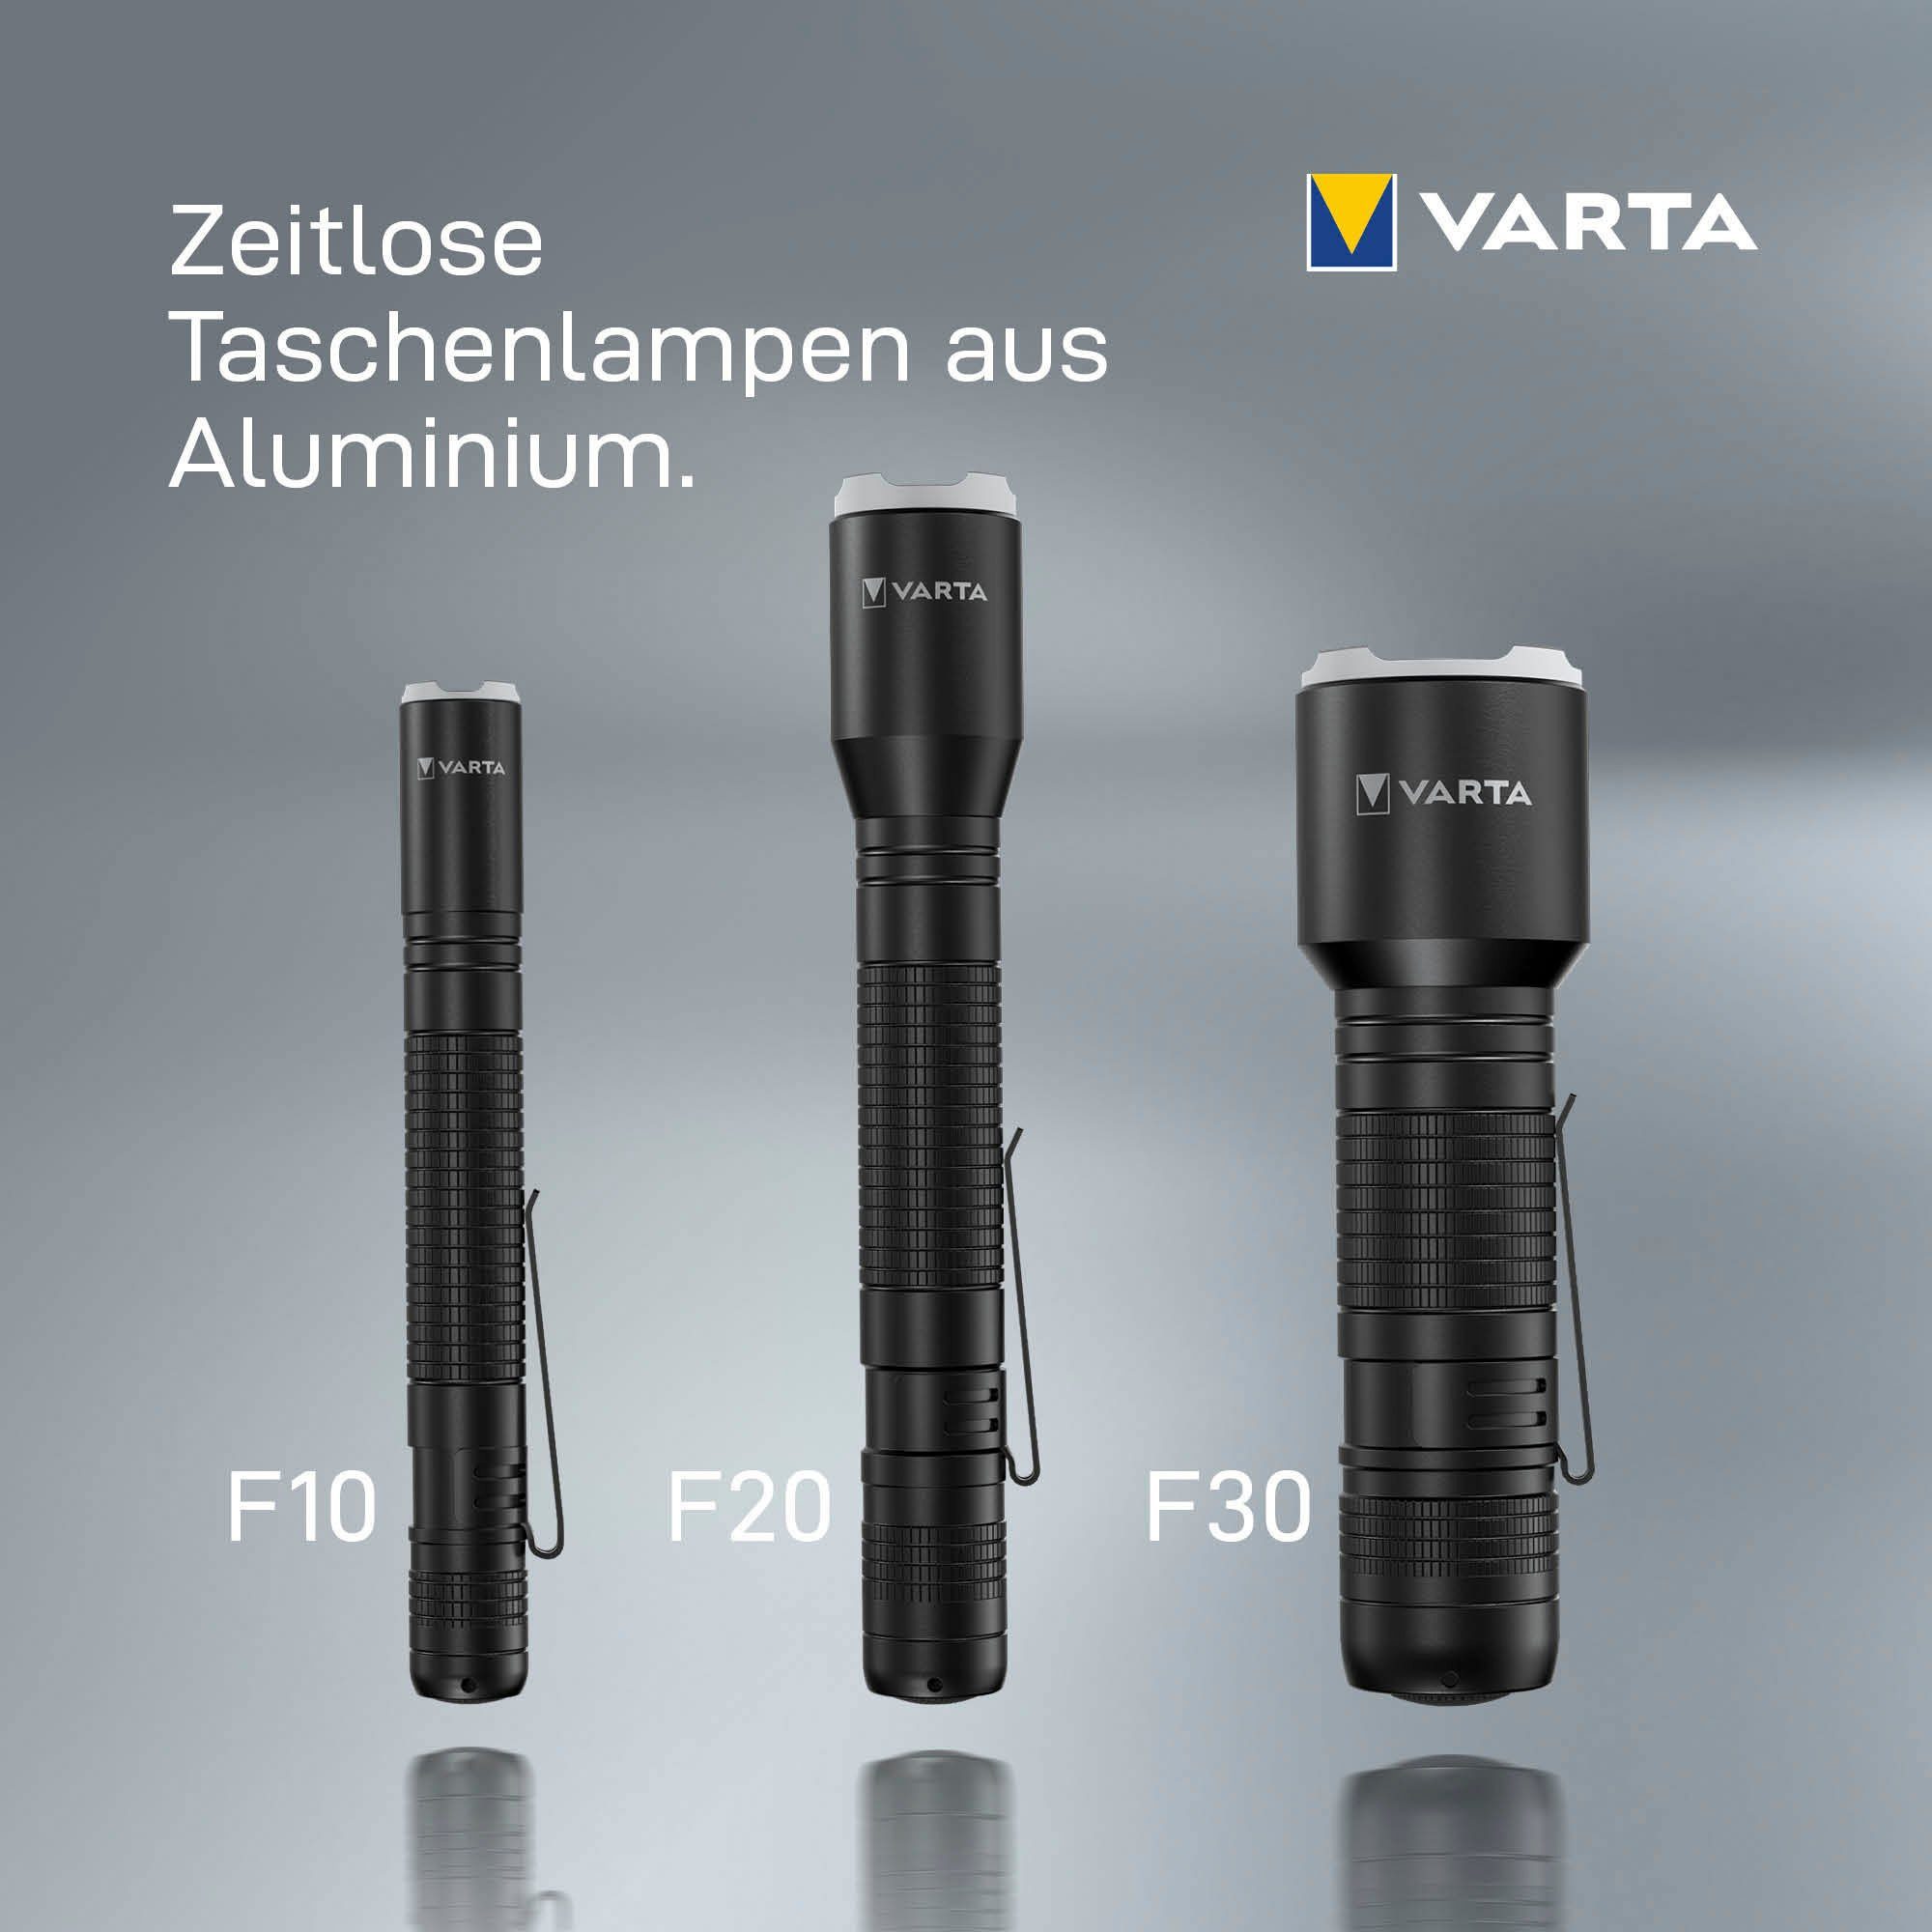 Light Pro F20 Aluminium (1-St) Taschenlampe VARTA